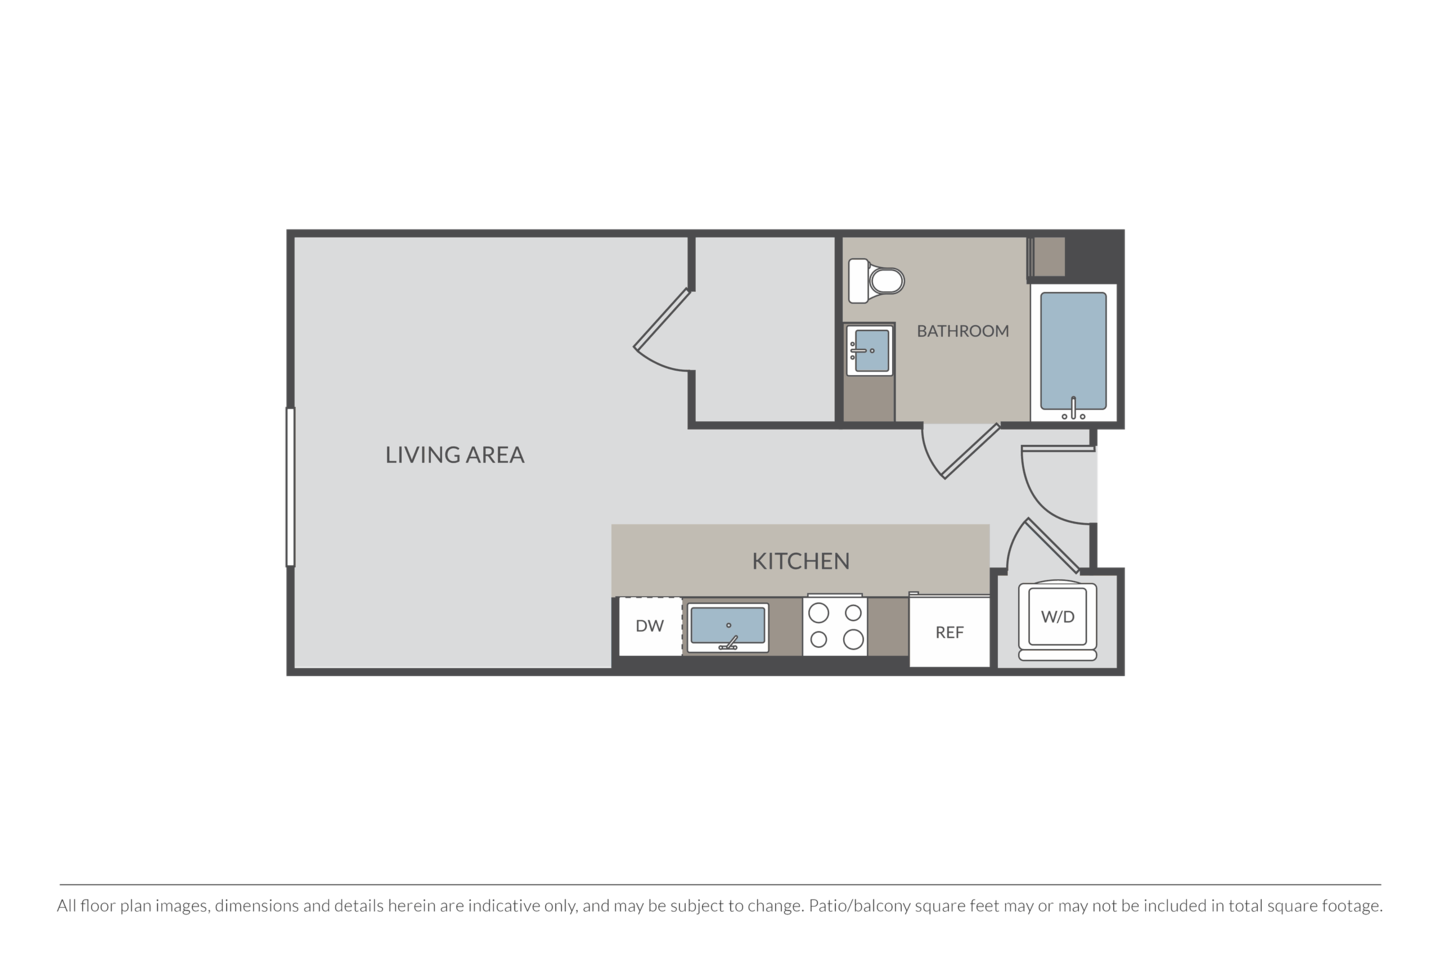 Floorplan diagram for Melrose, showing Studio